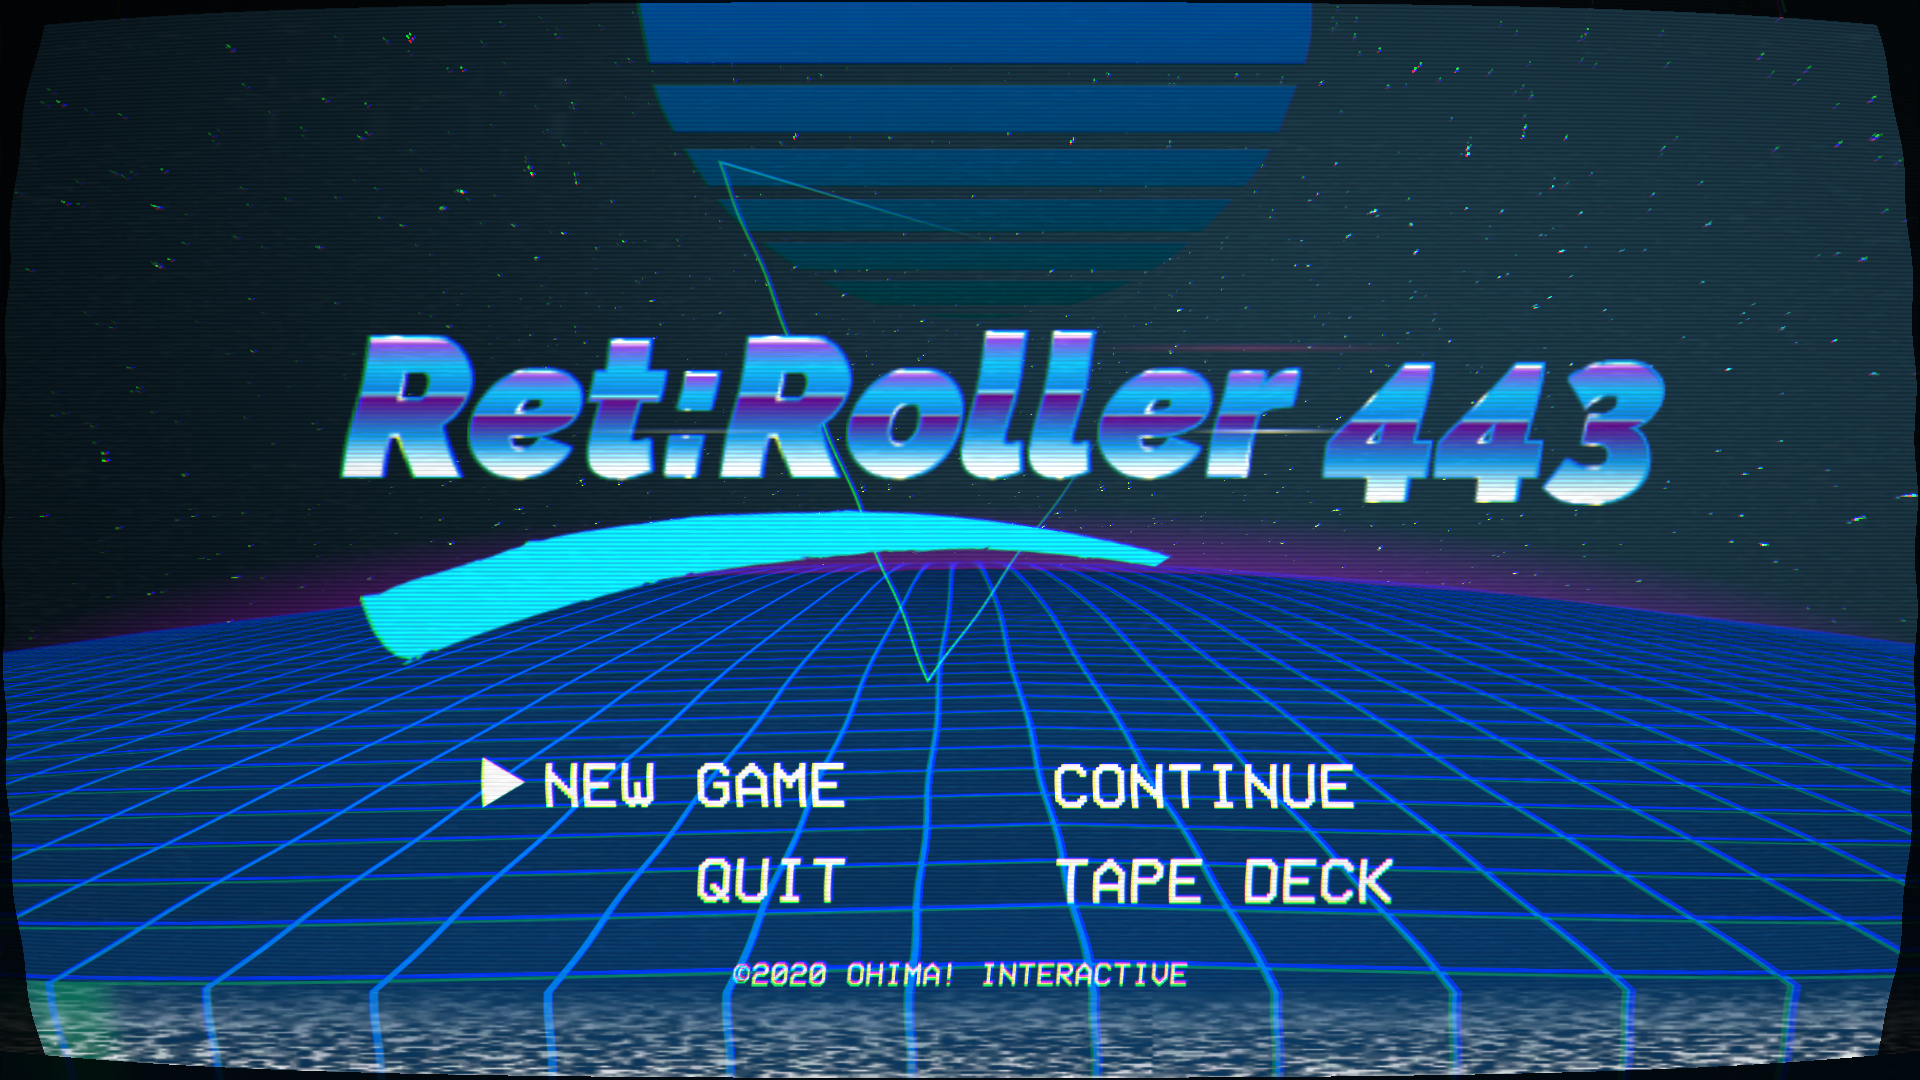 Ret:Roller 443